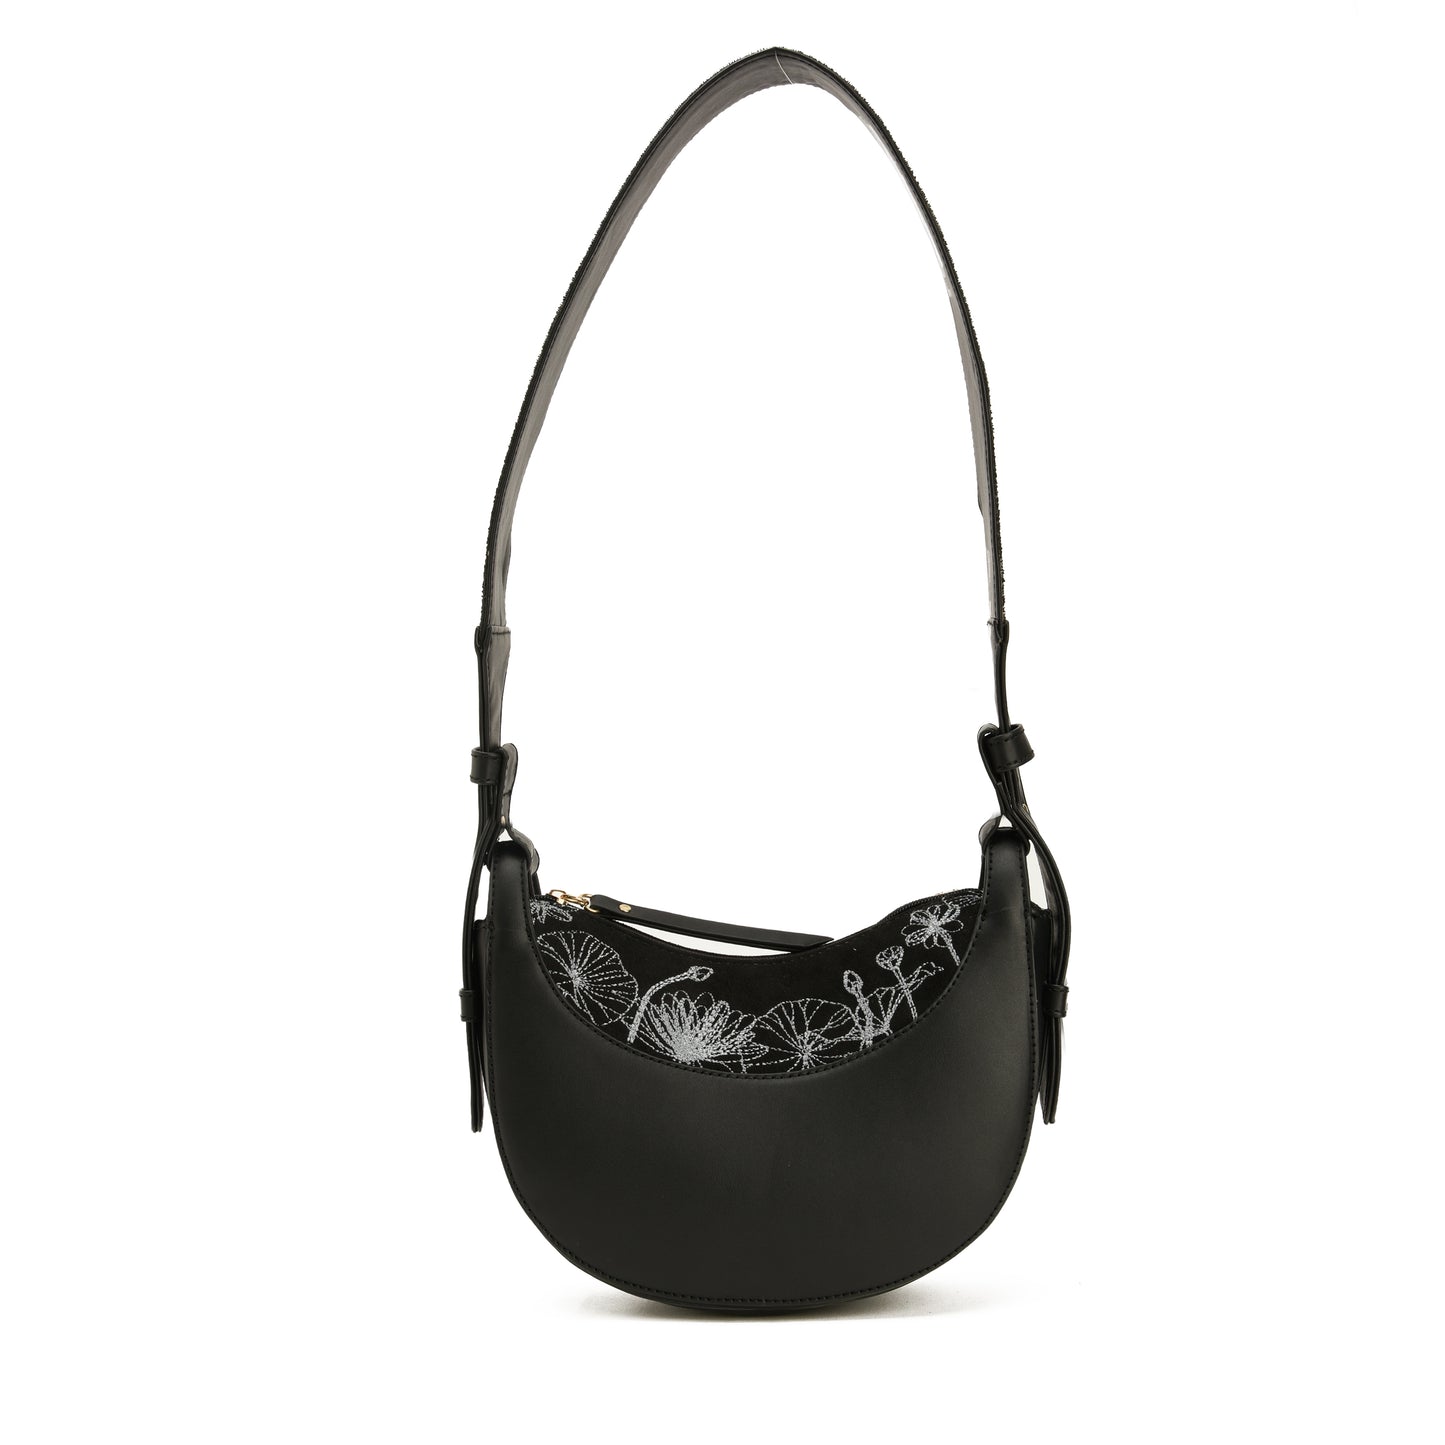 Handbag Black with embroidery